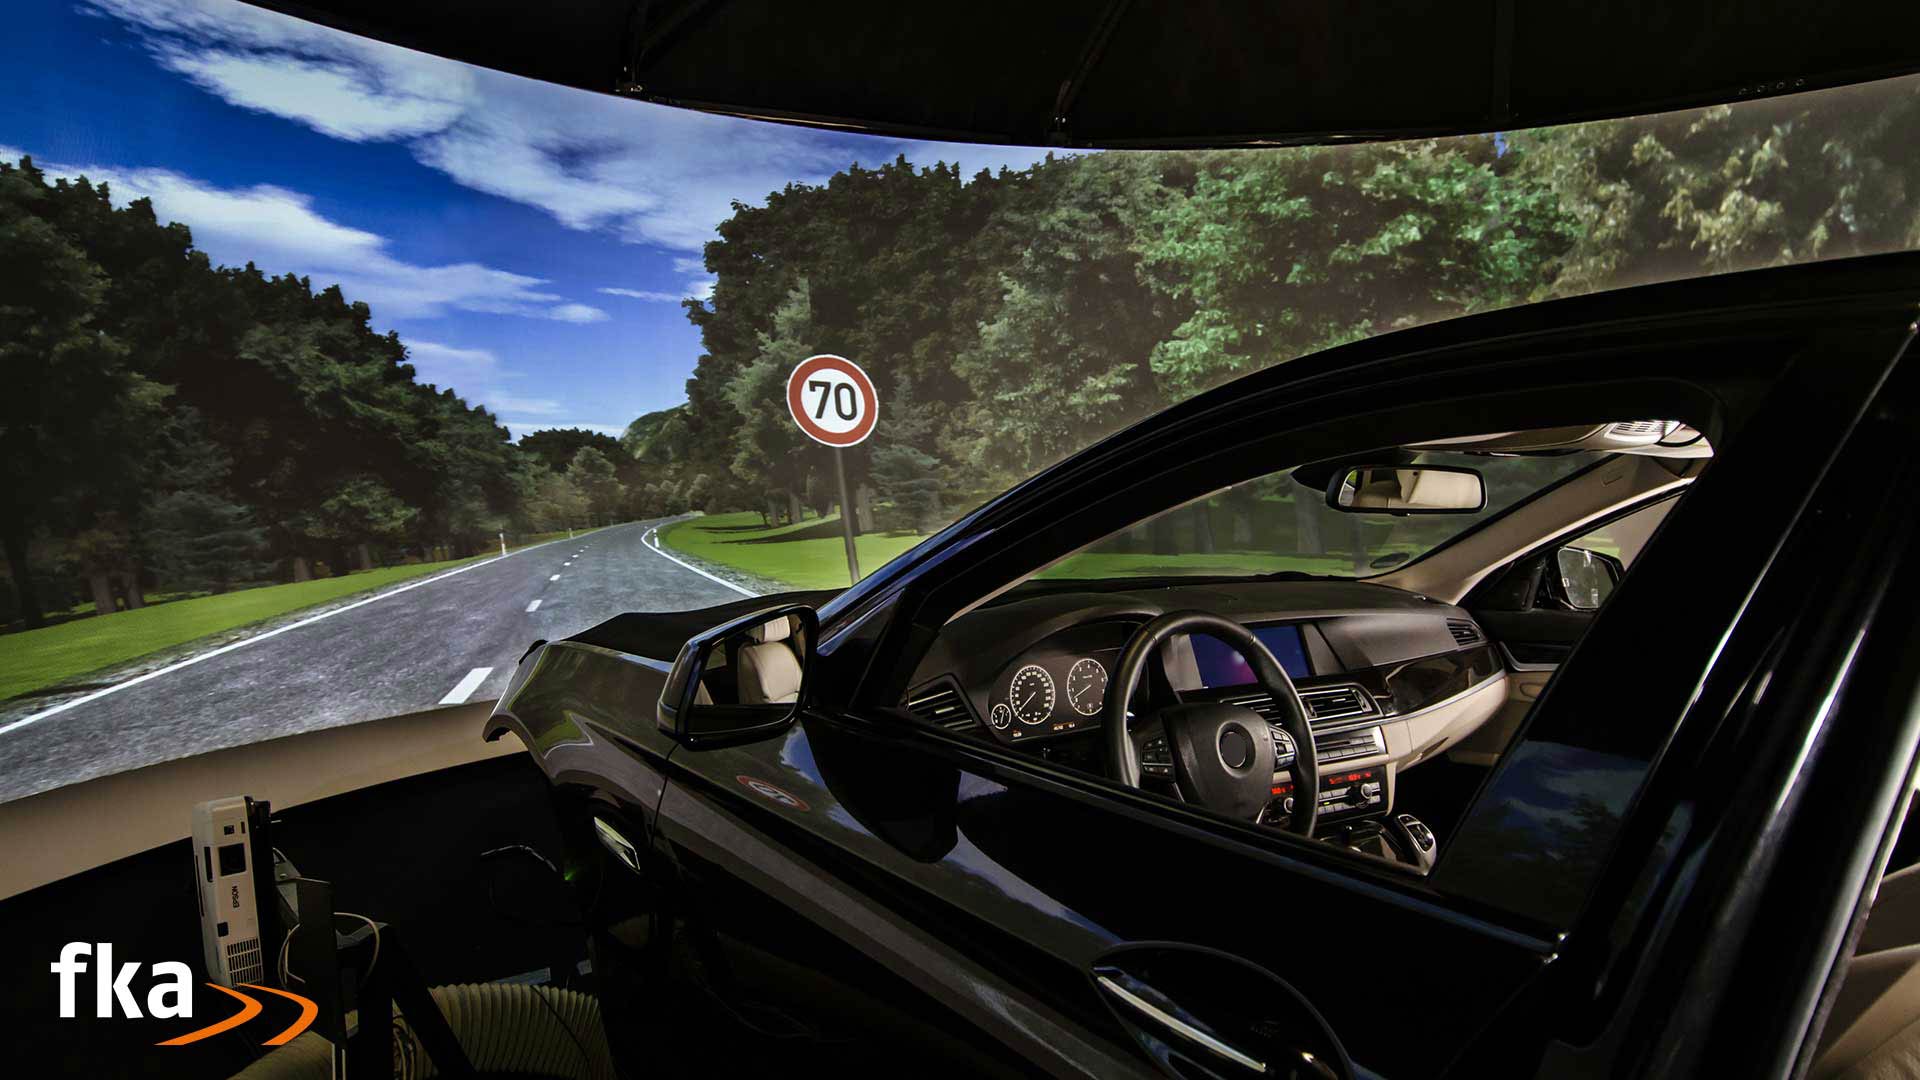 fka's static driving simulator